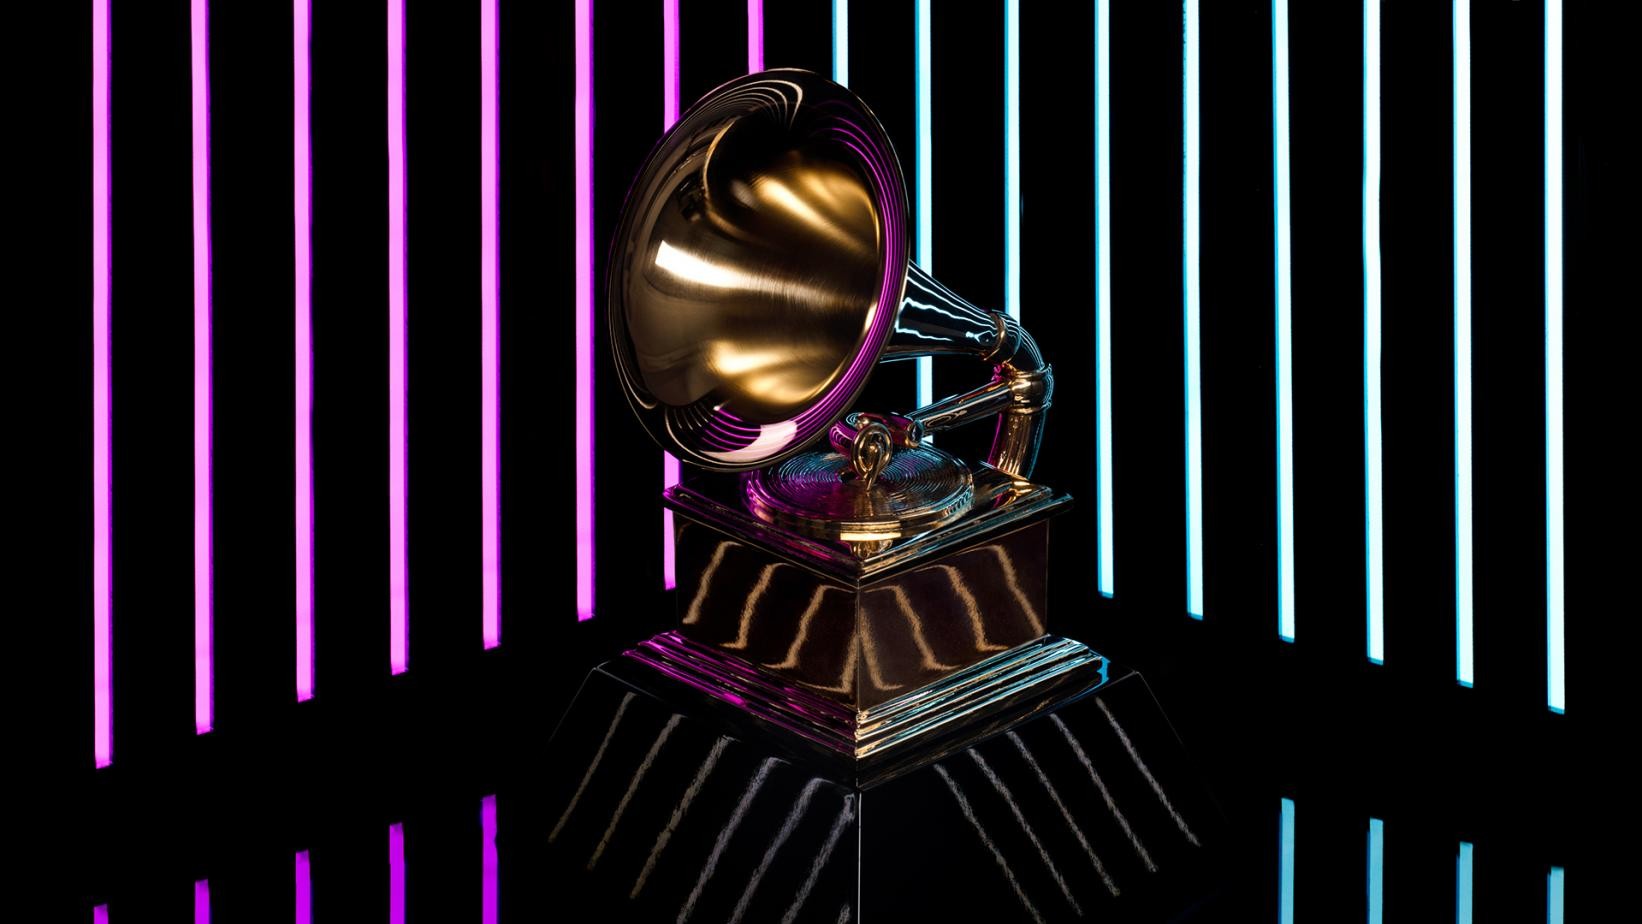 Telah Sukses Digelar, Yuk, Intip 4 Momen Seru di Grammy Awards 2022!